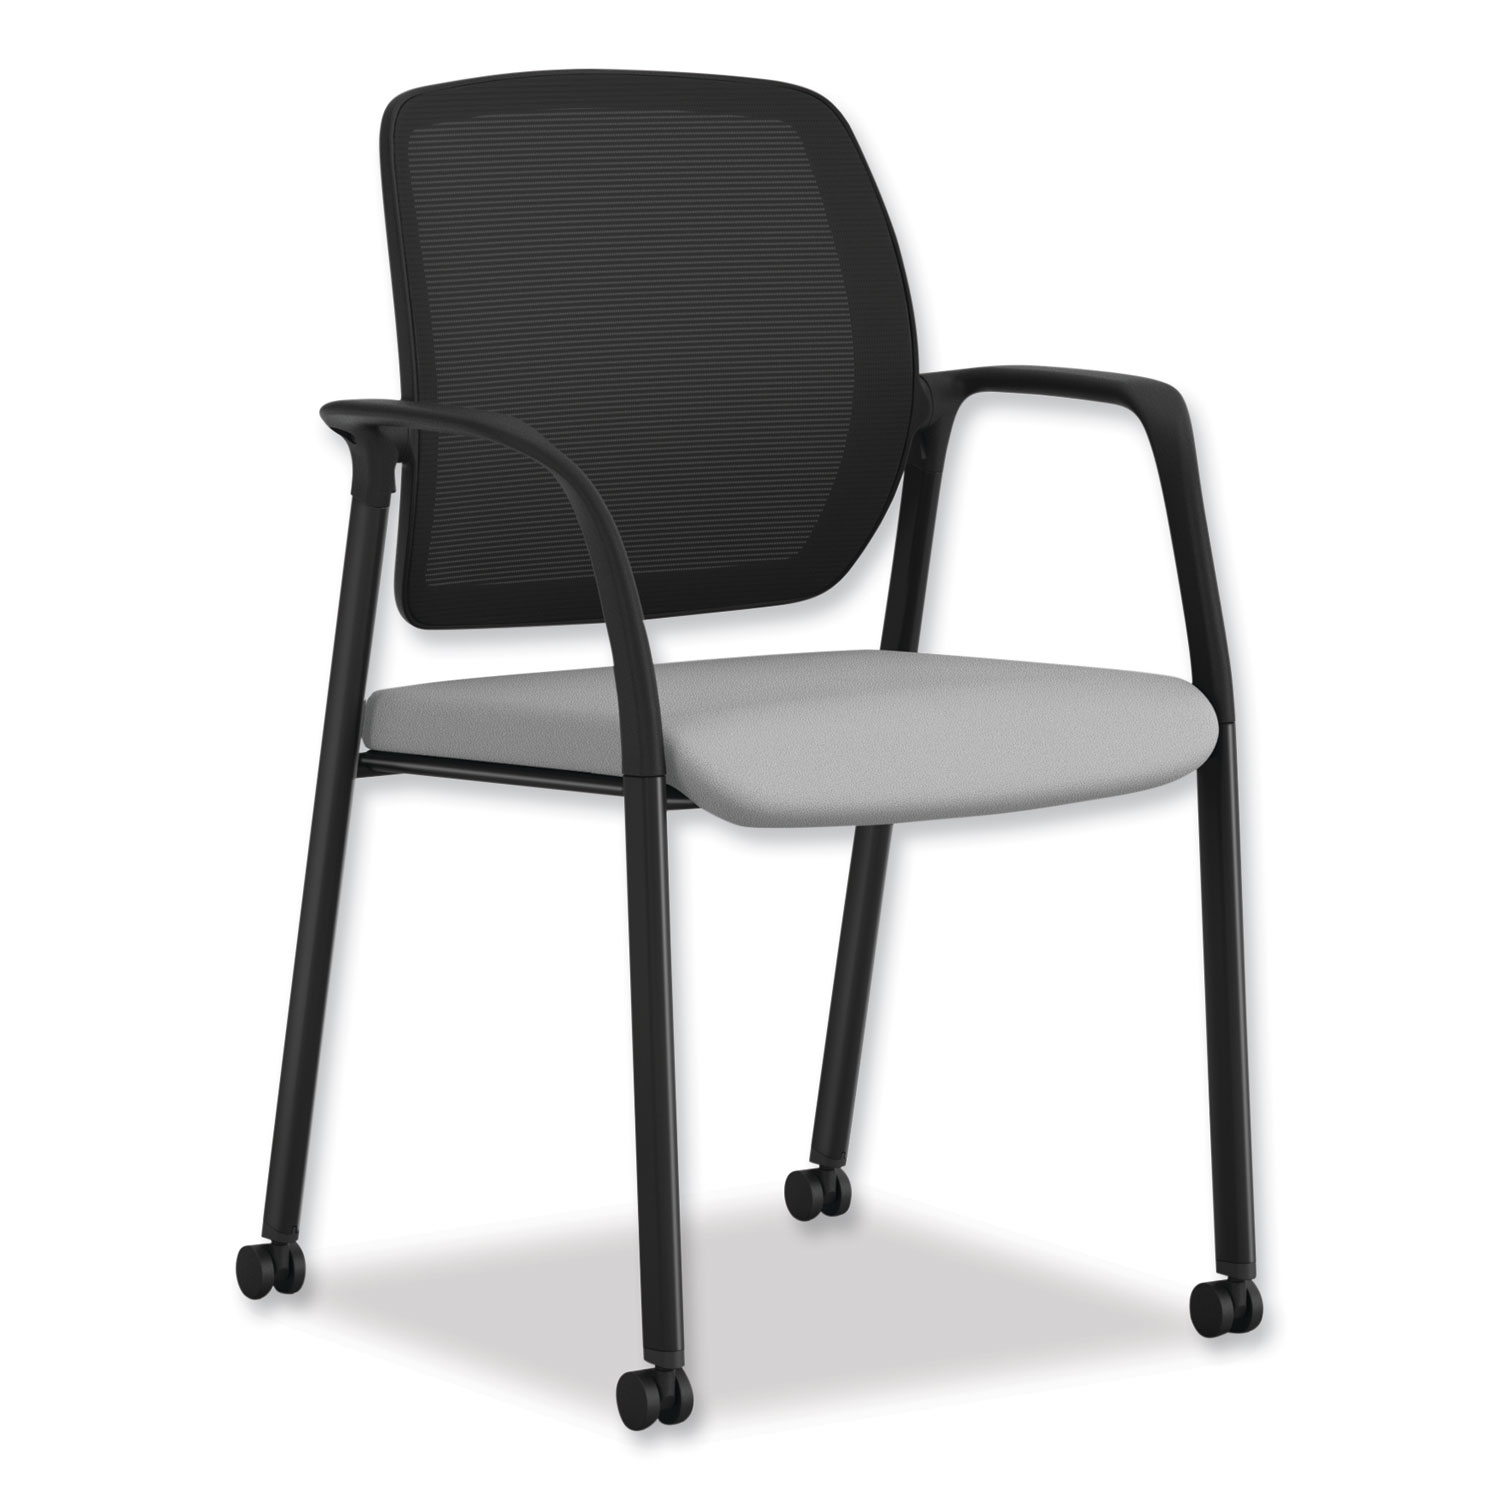 HON HONNR6FMC22P71, MultiCategory:Chairs, Stools & Seating